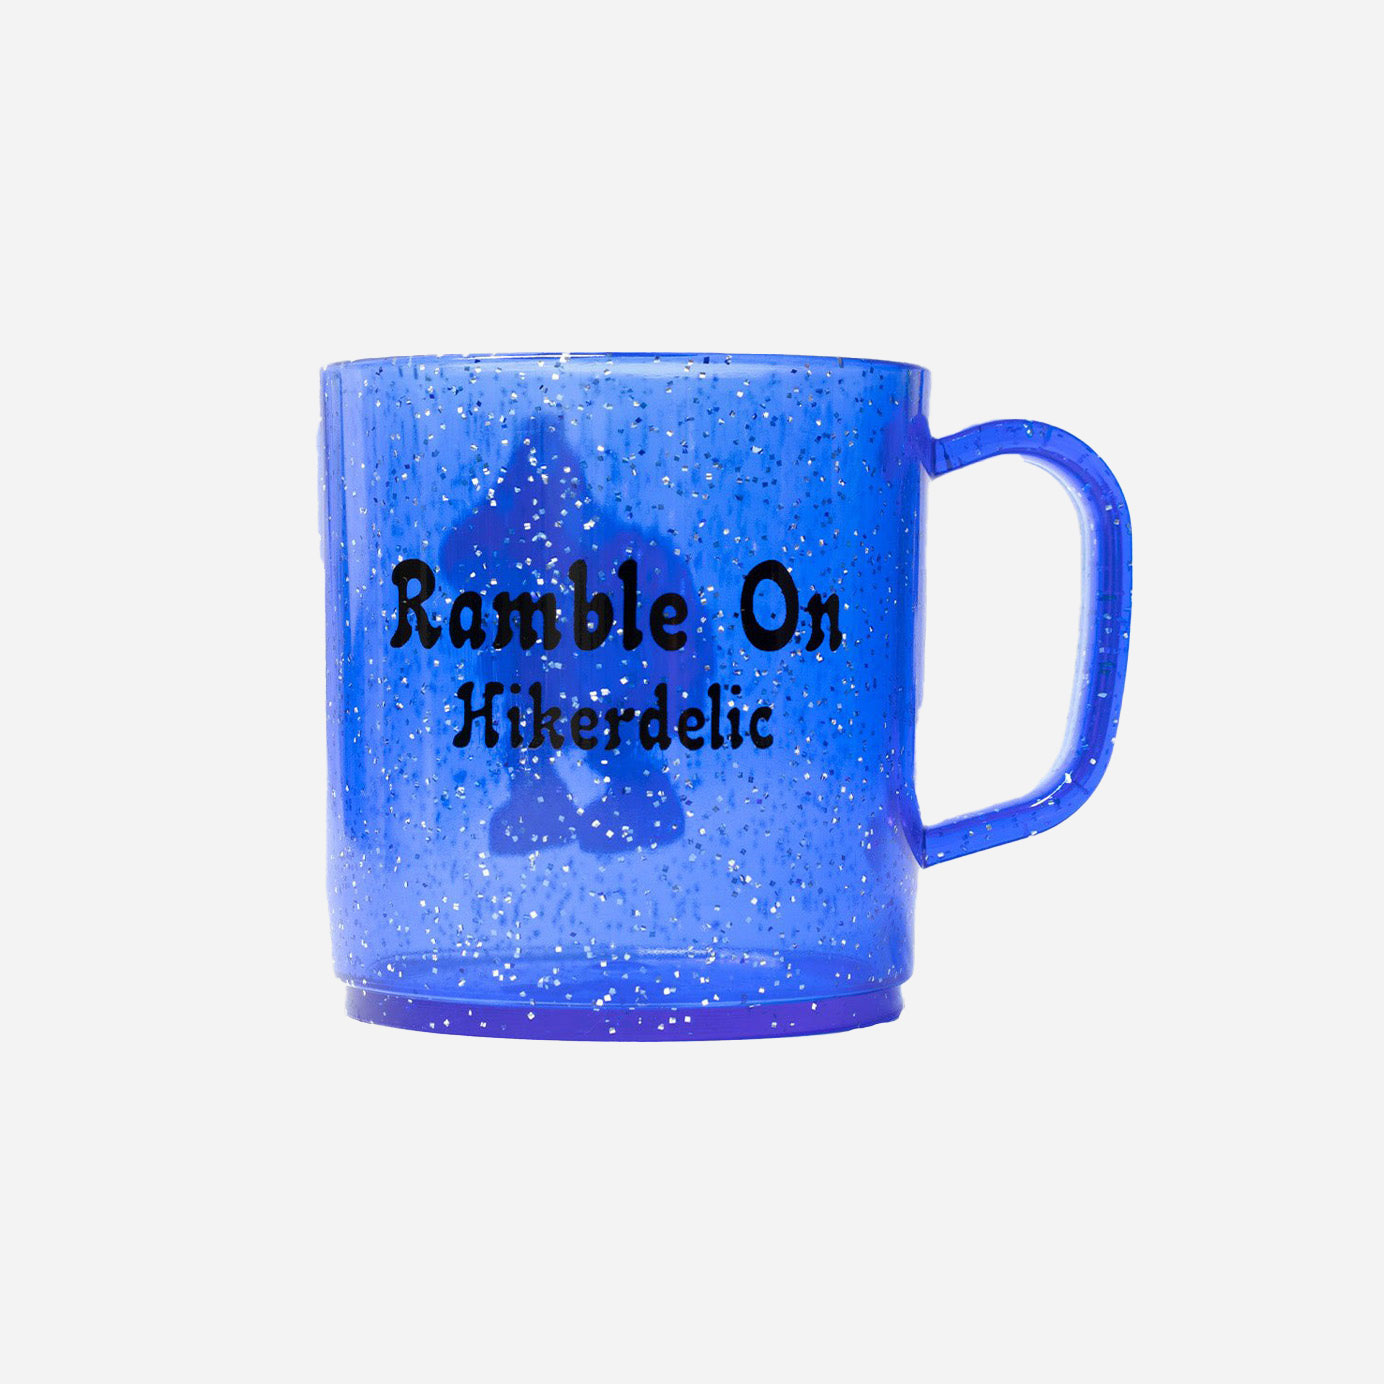 Hikerdelic Eric Mug - Blueberry Fizz